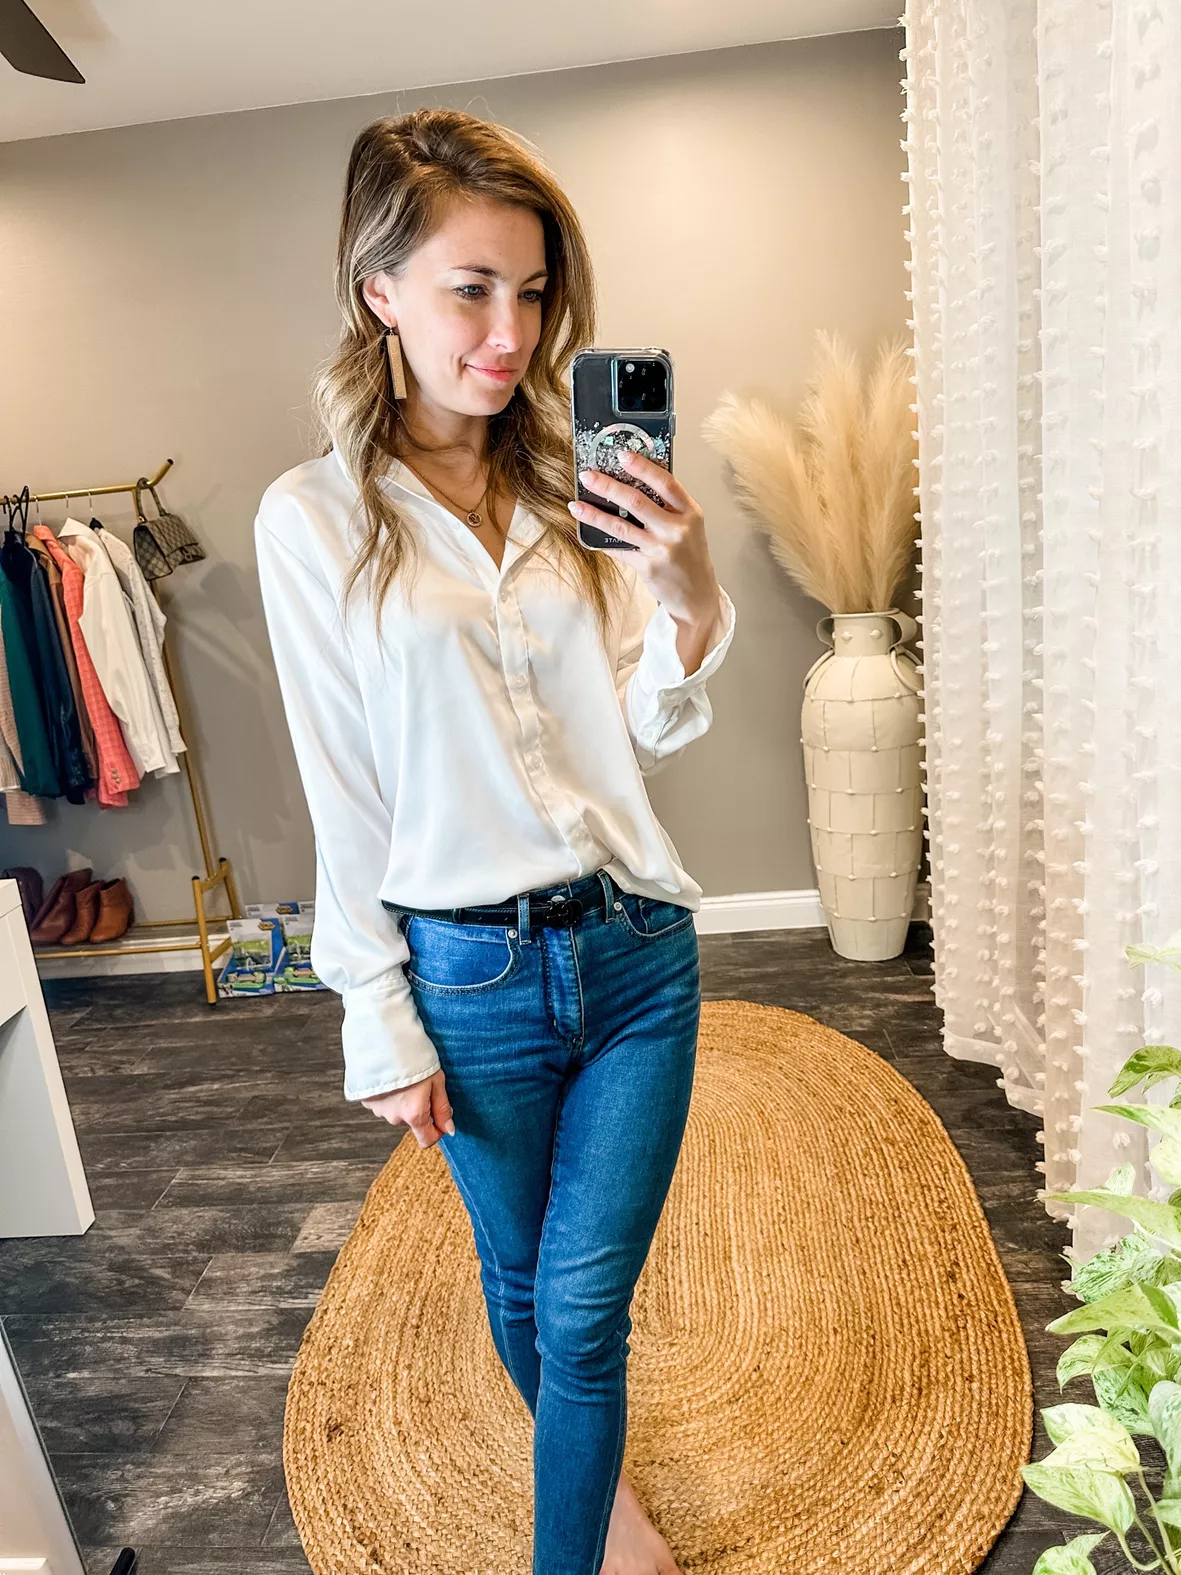 Women's Long Sleeve Oversized Satin Button-Down Shirt - A New Day